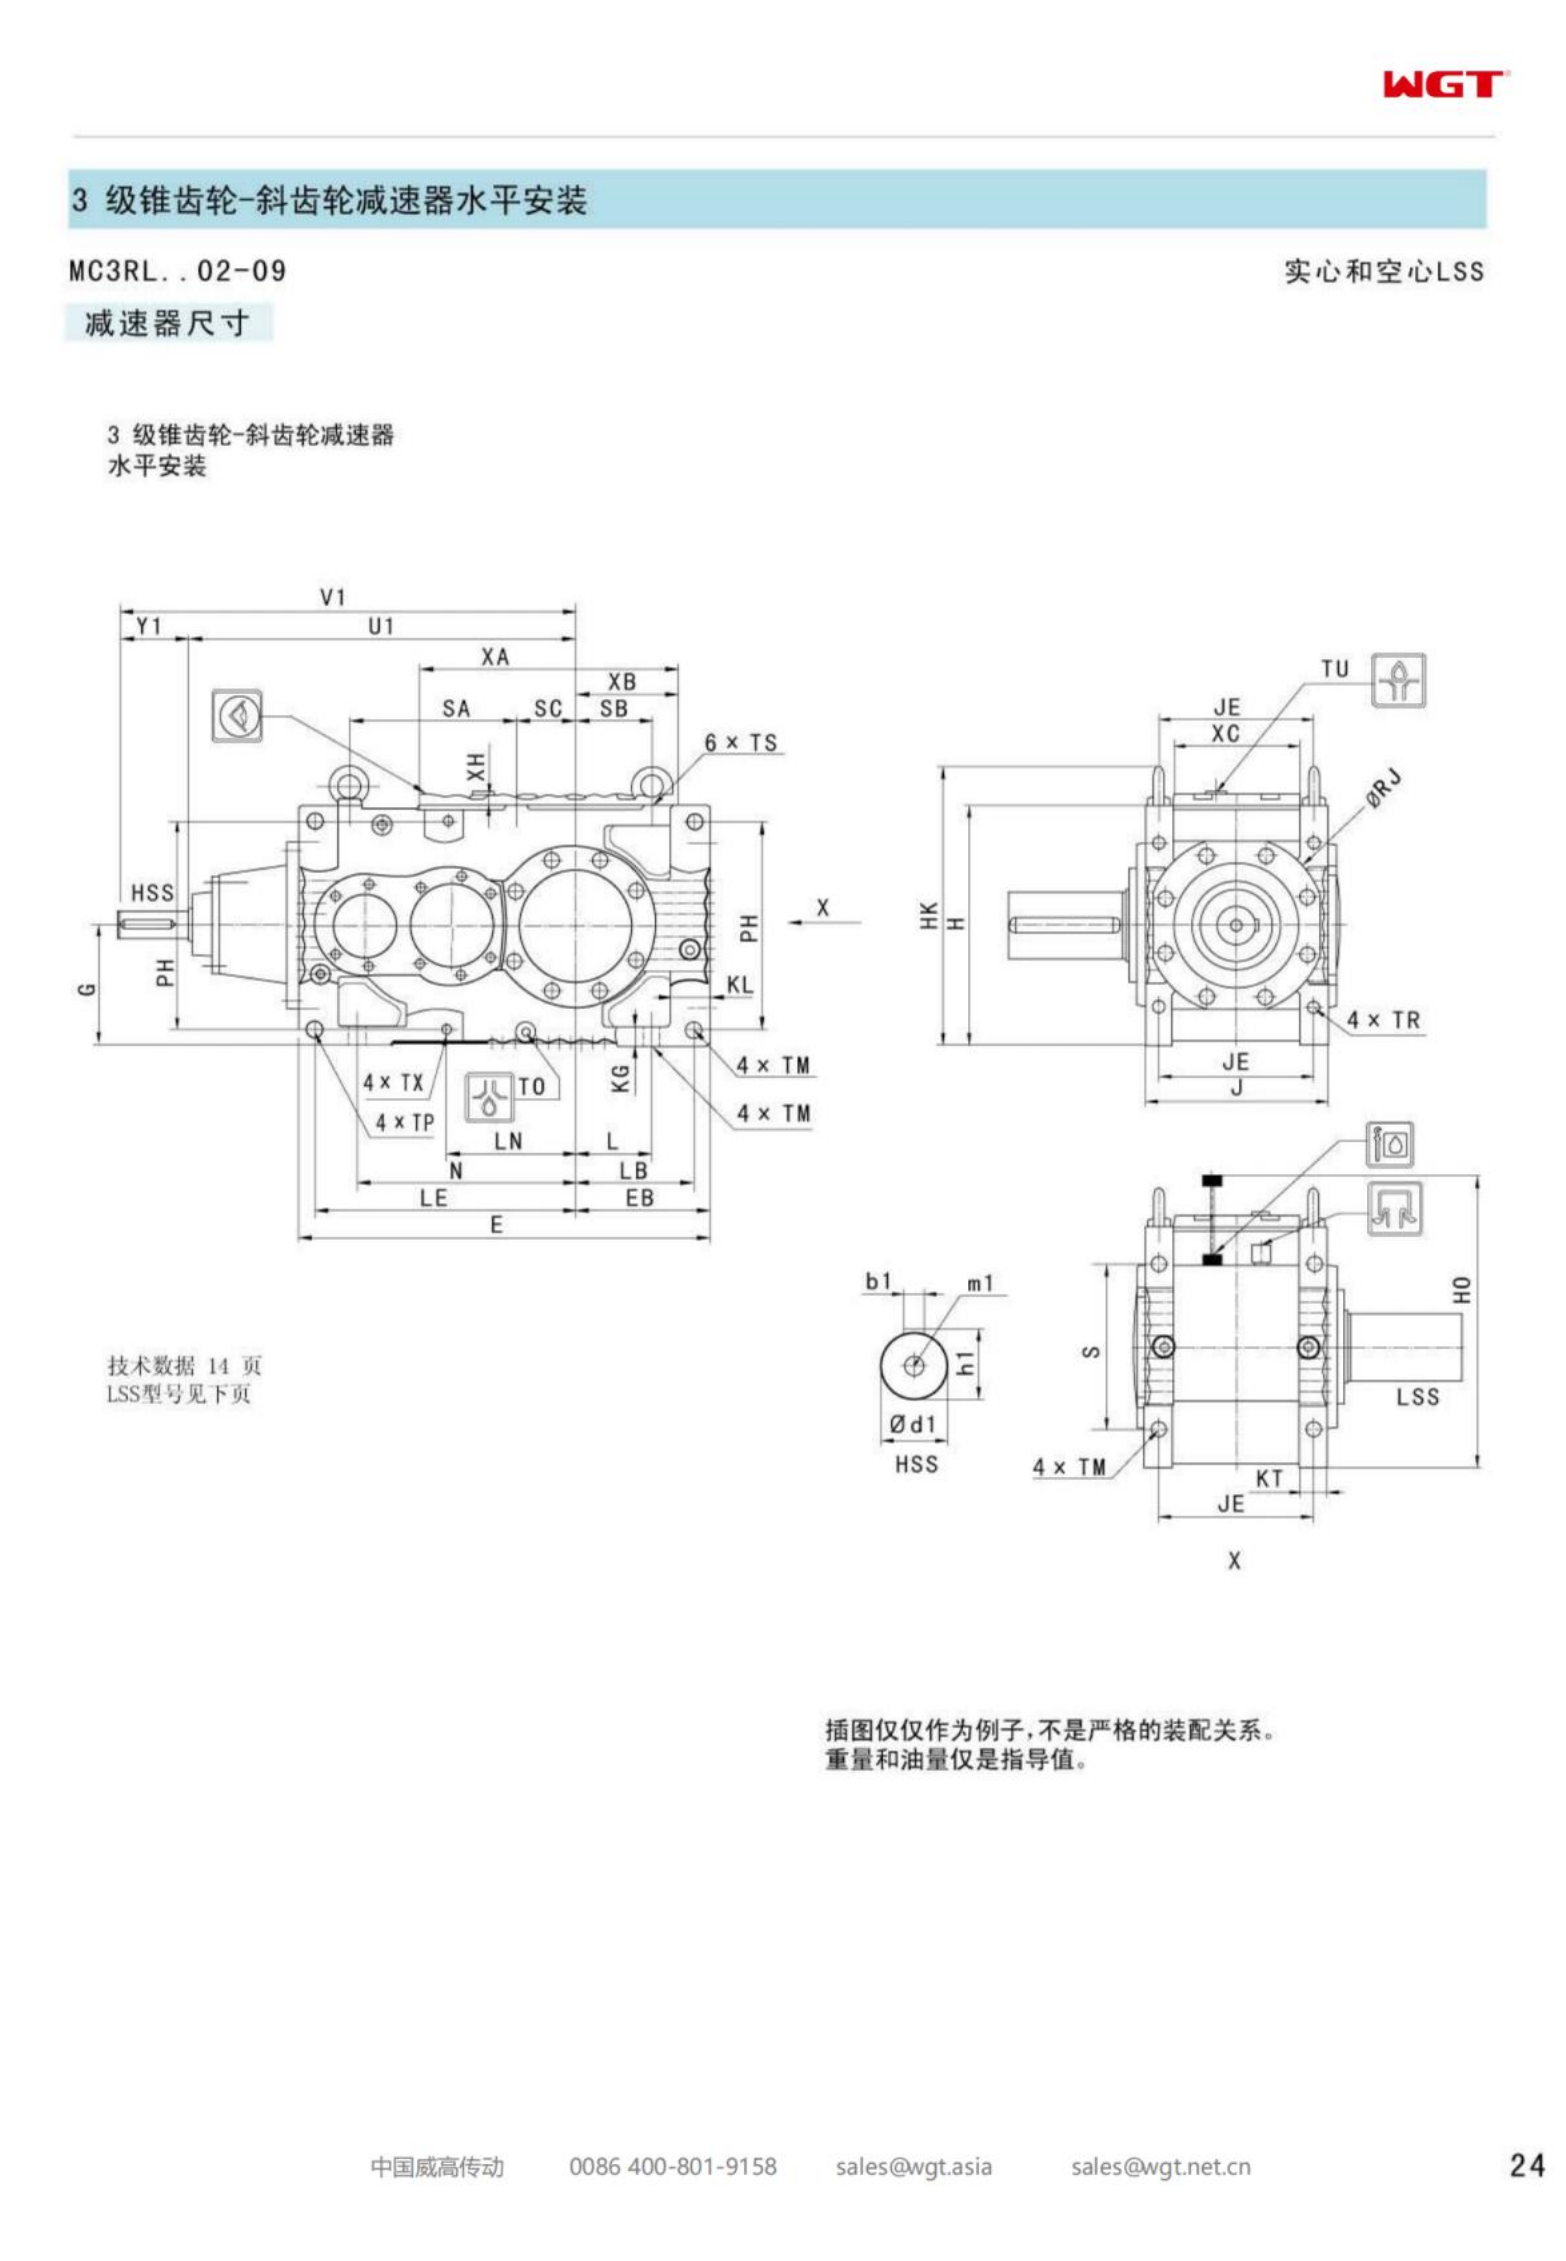 MC3RLHT04 replaces _SEW_MC_ series gearbox (patent)